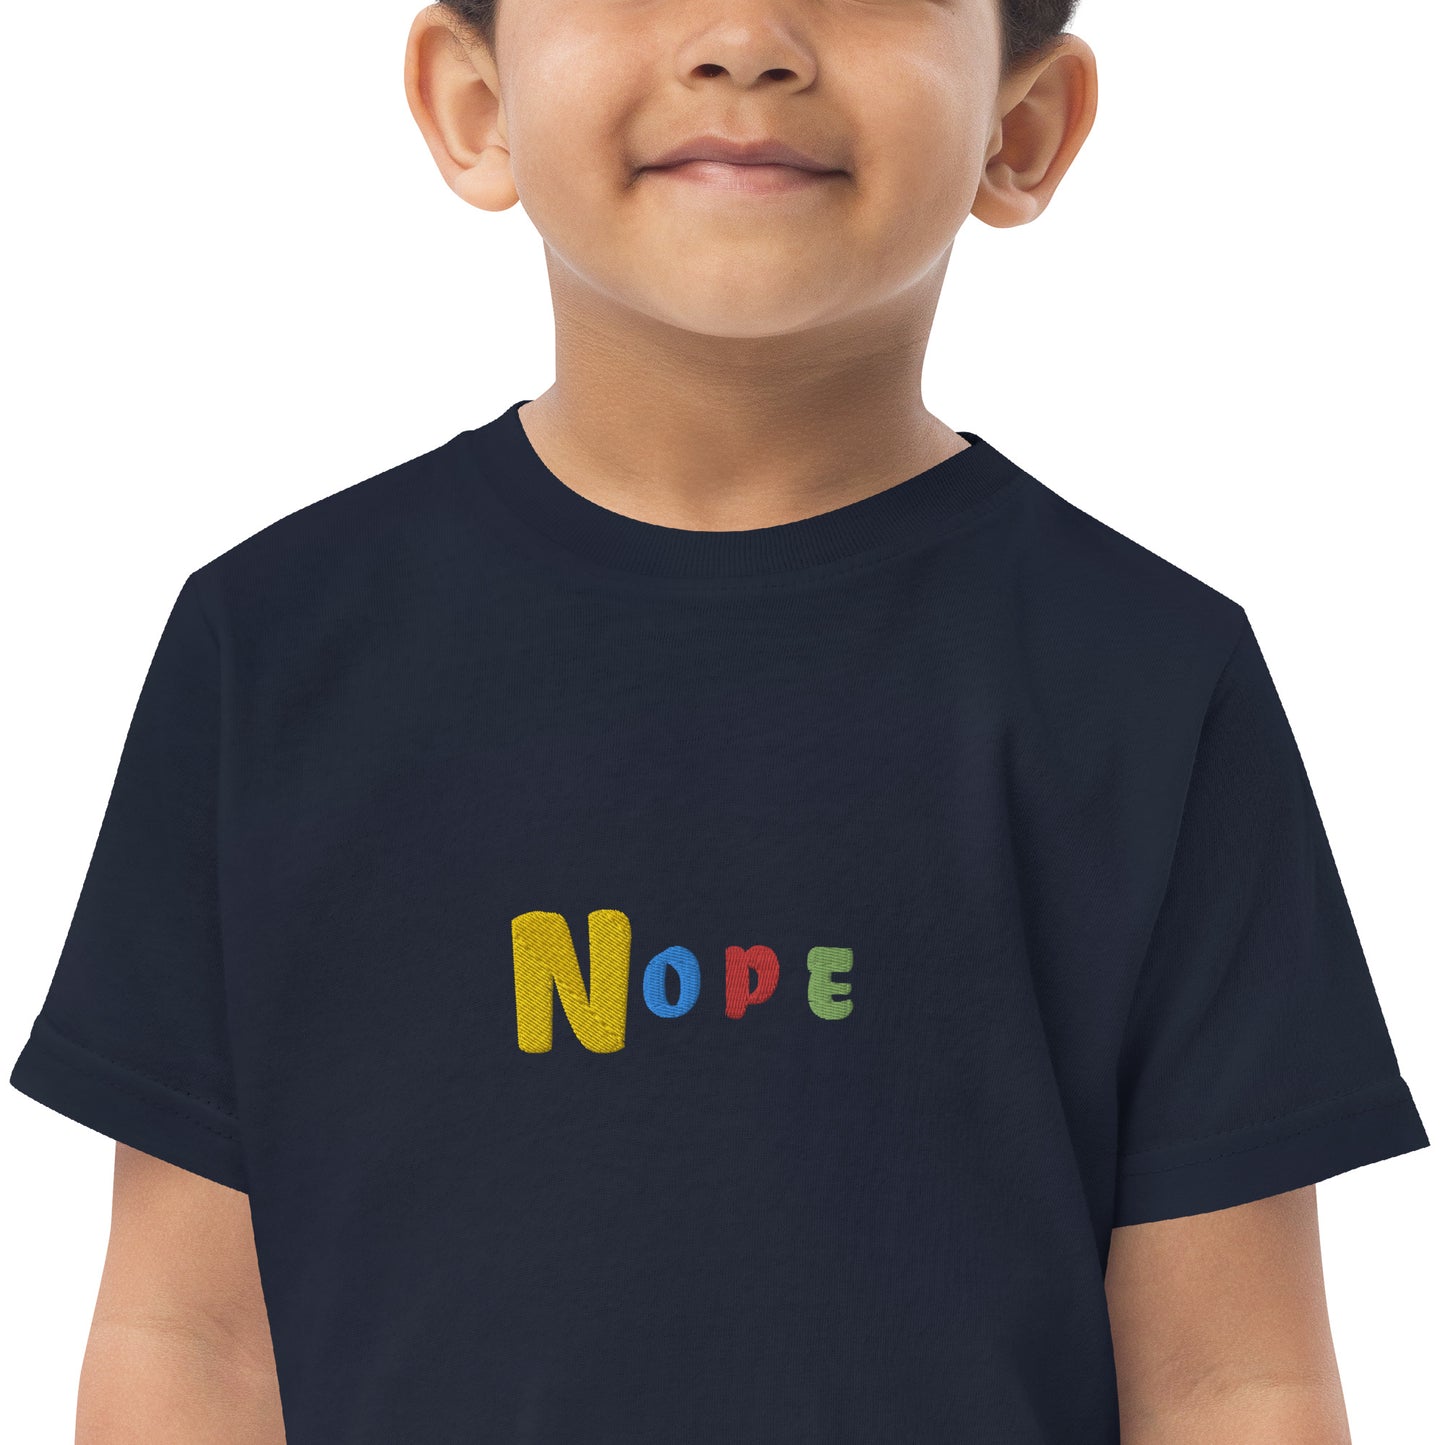 Nope Toddler jersey t-shirt